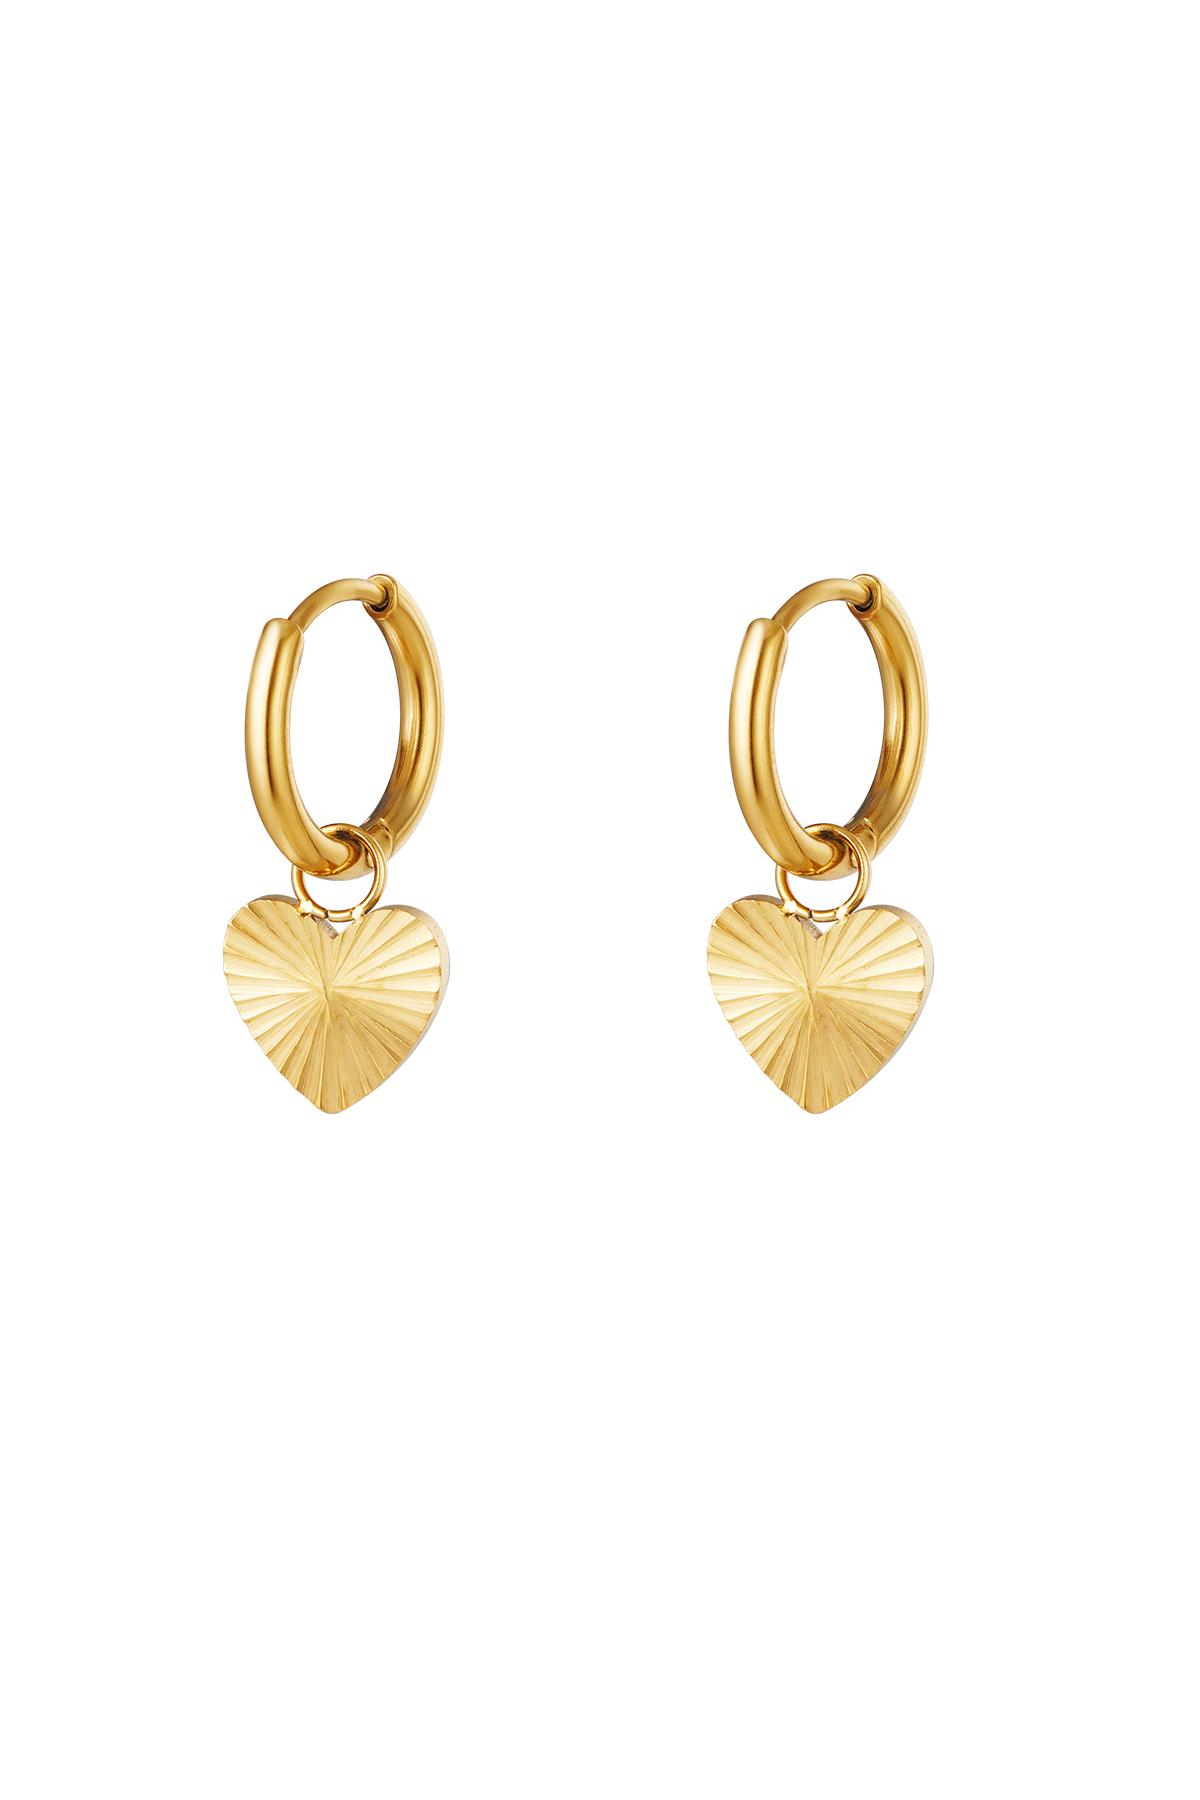 Stainles steel earrings heart Gold Stainless Steel h5 